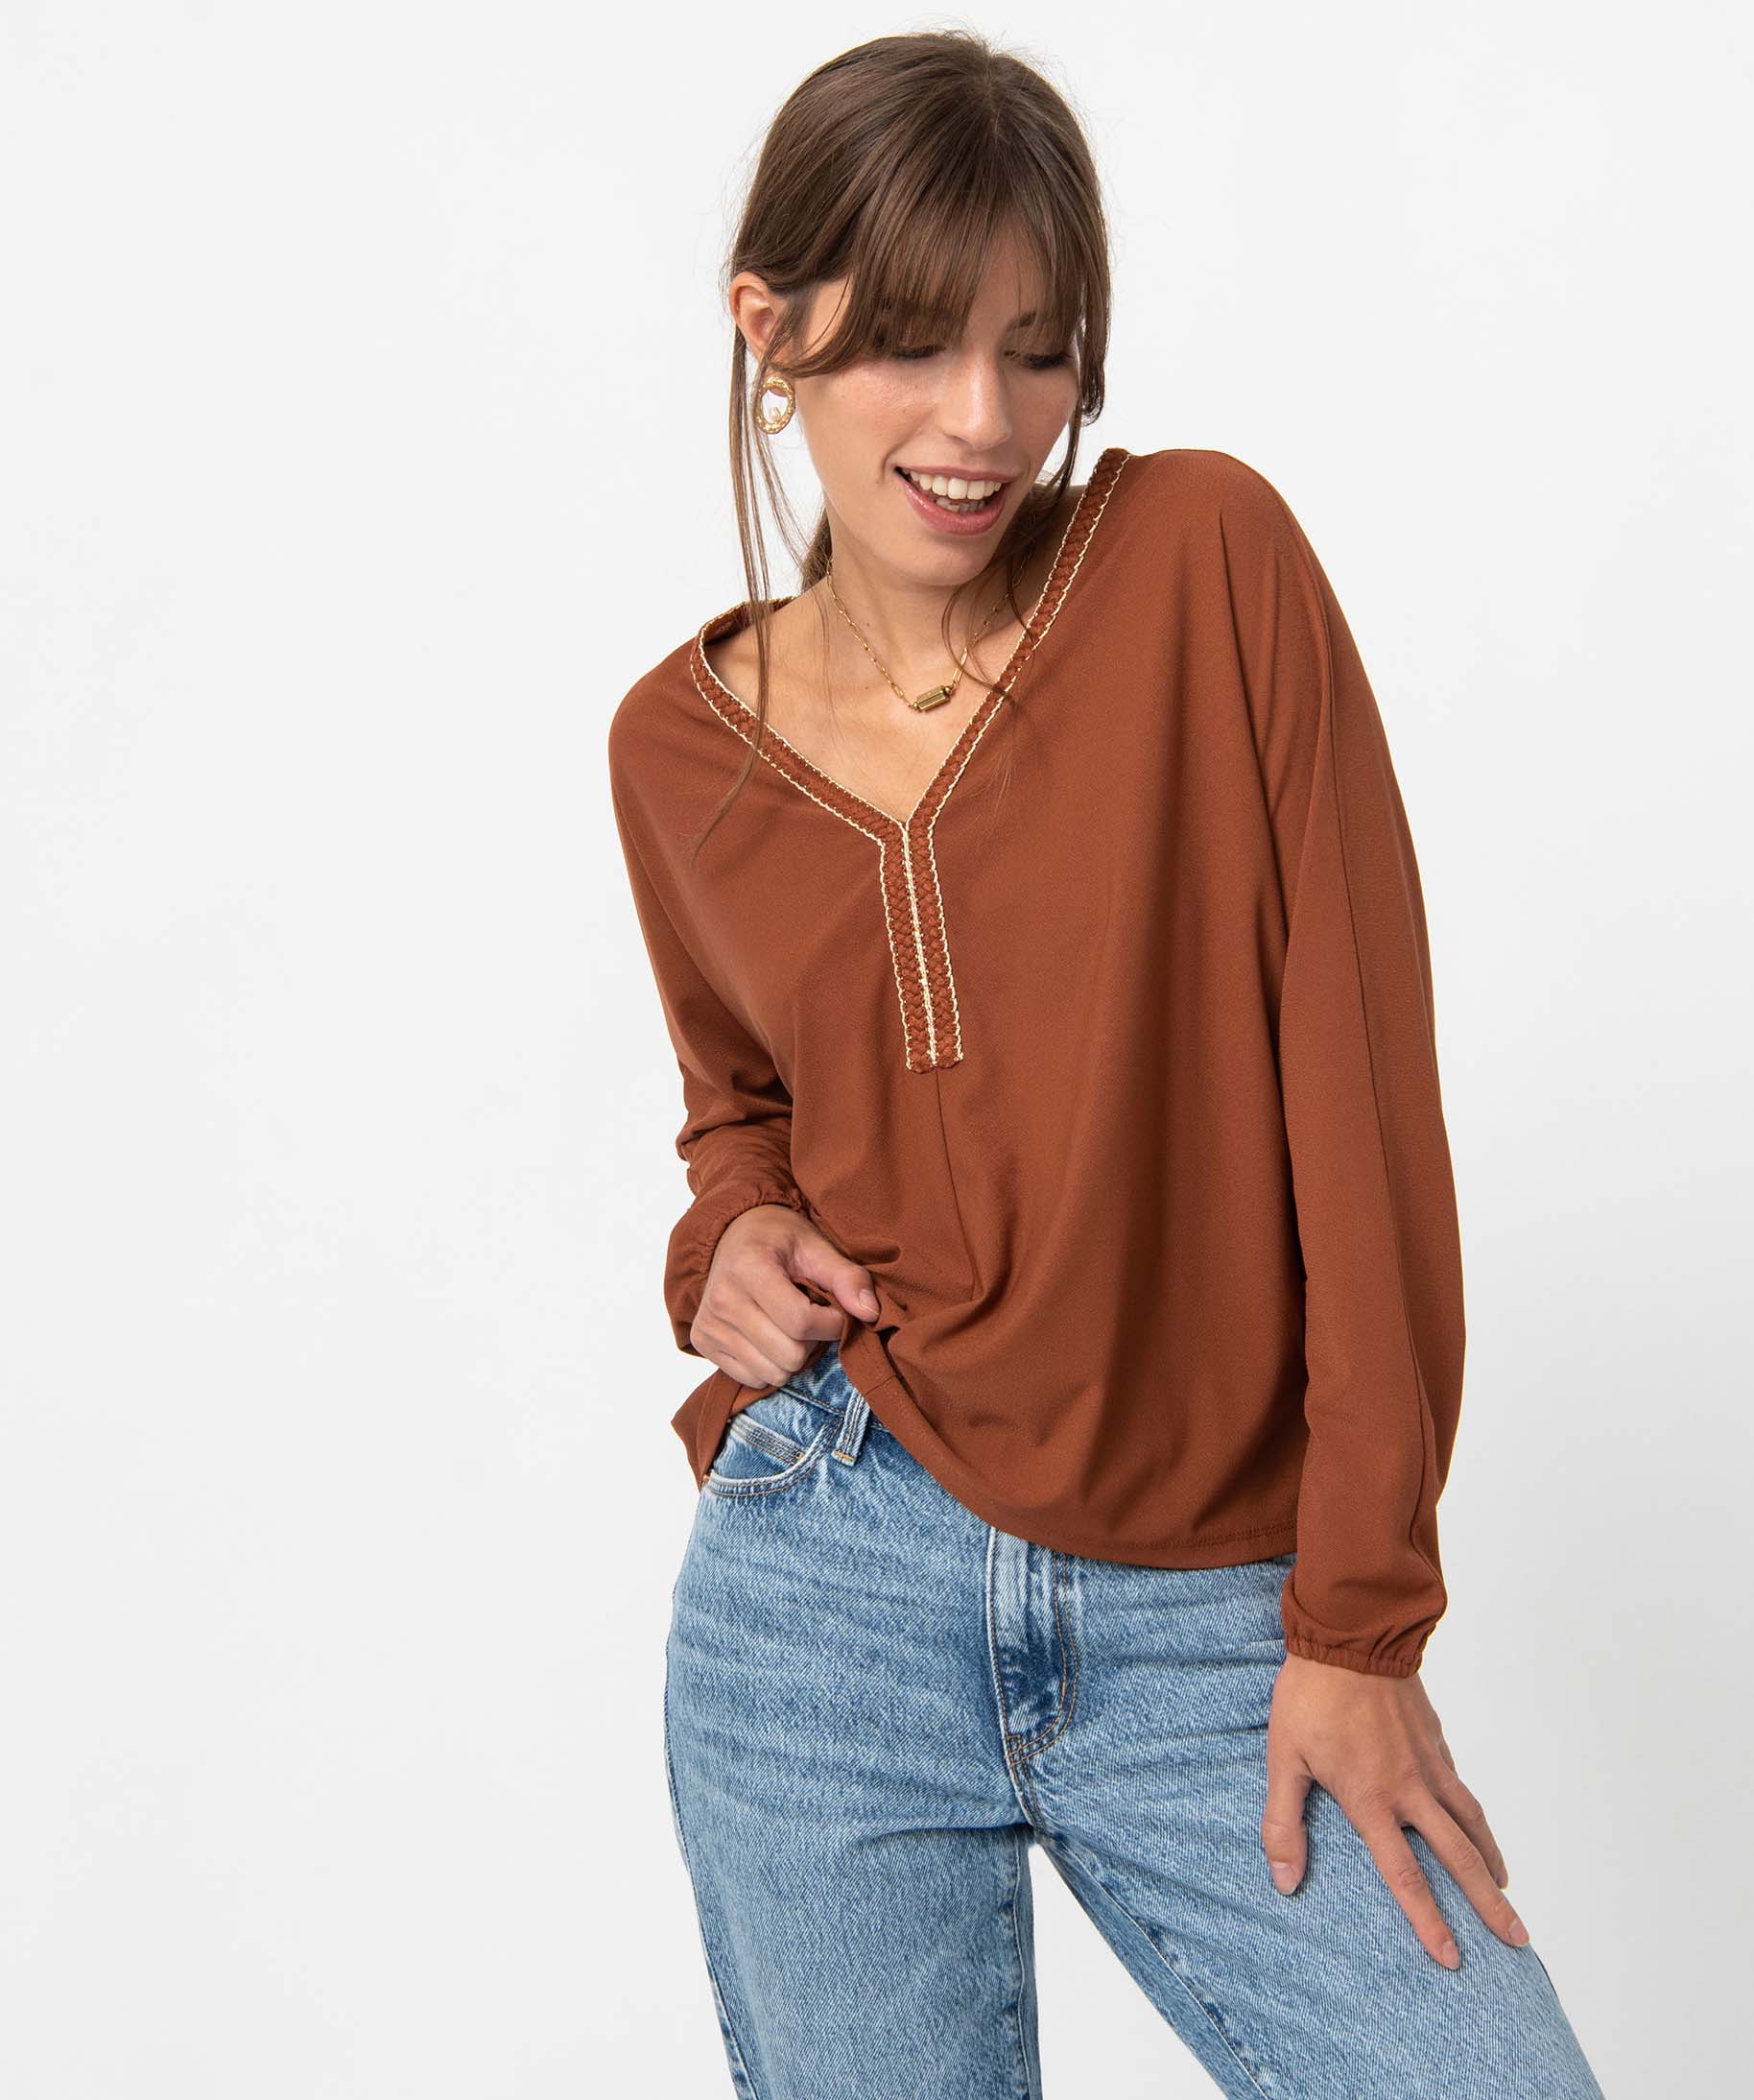 tee-shirt femme a manches longues et encolure fantaisie brun t-shirts manches longues